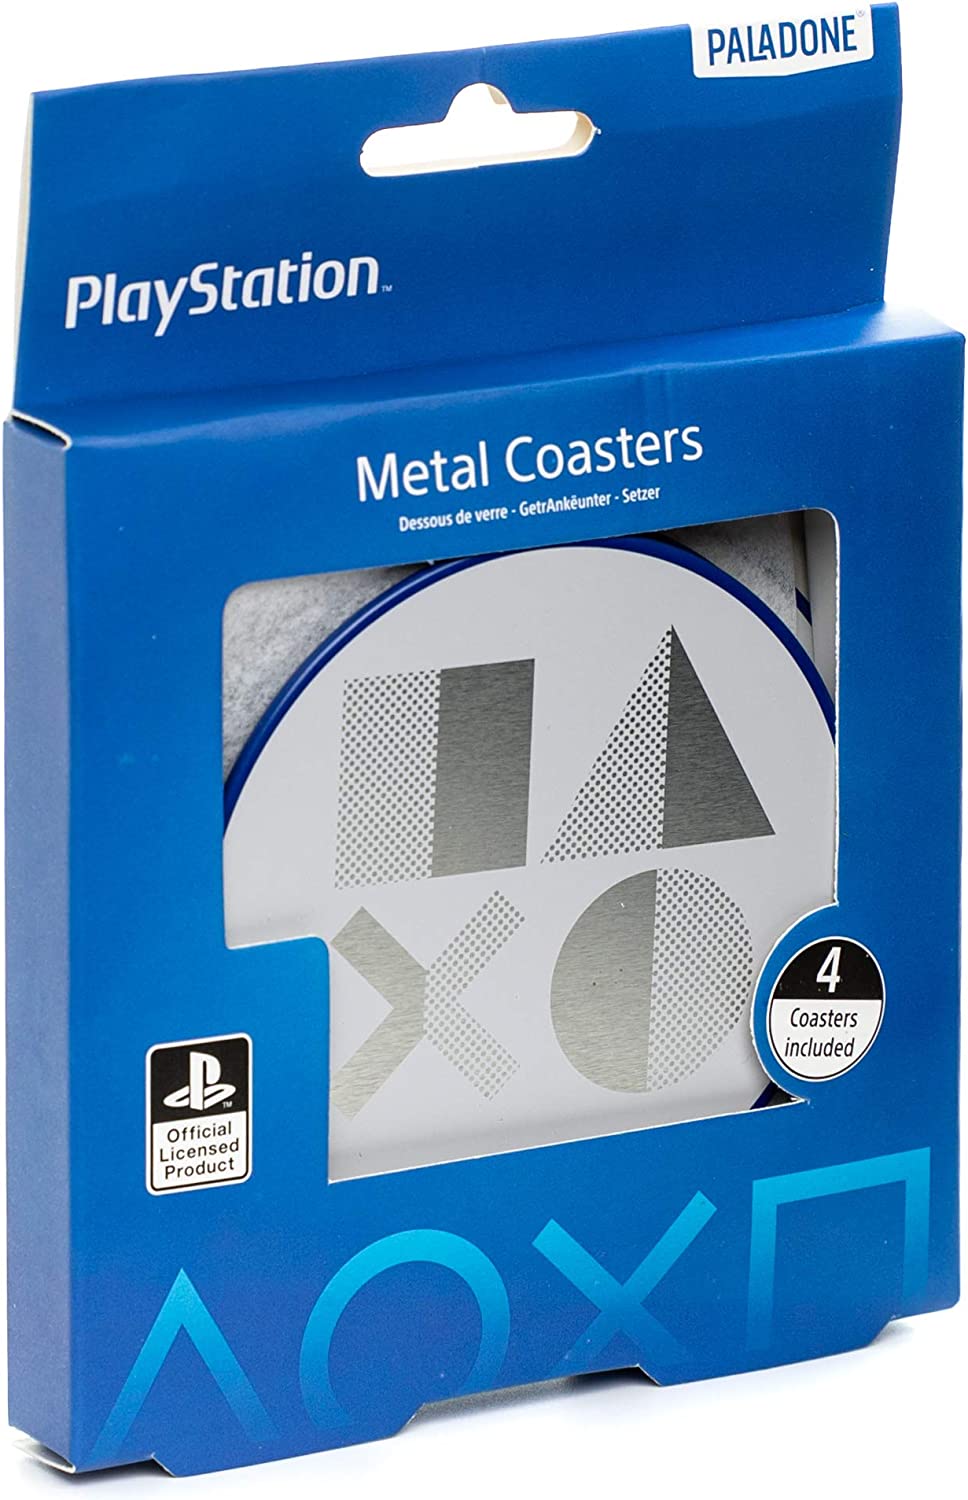 Playstation PS5 Metal Coasters